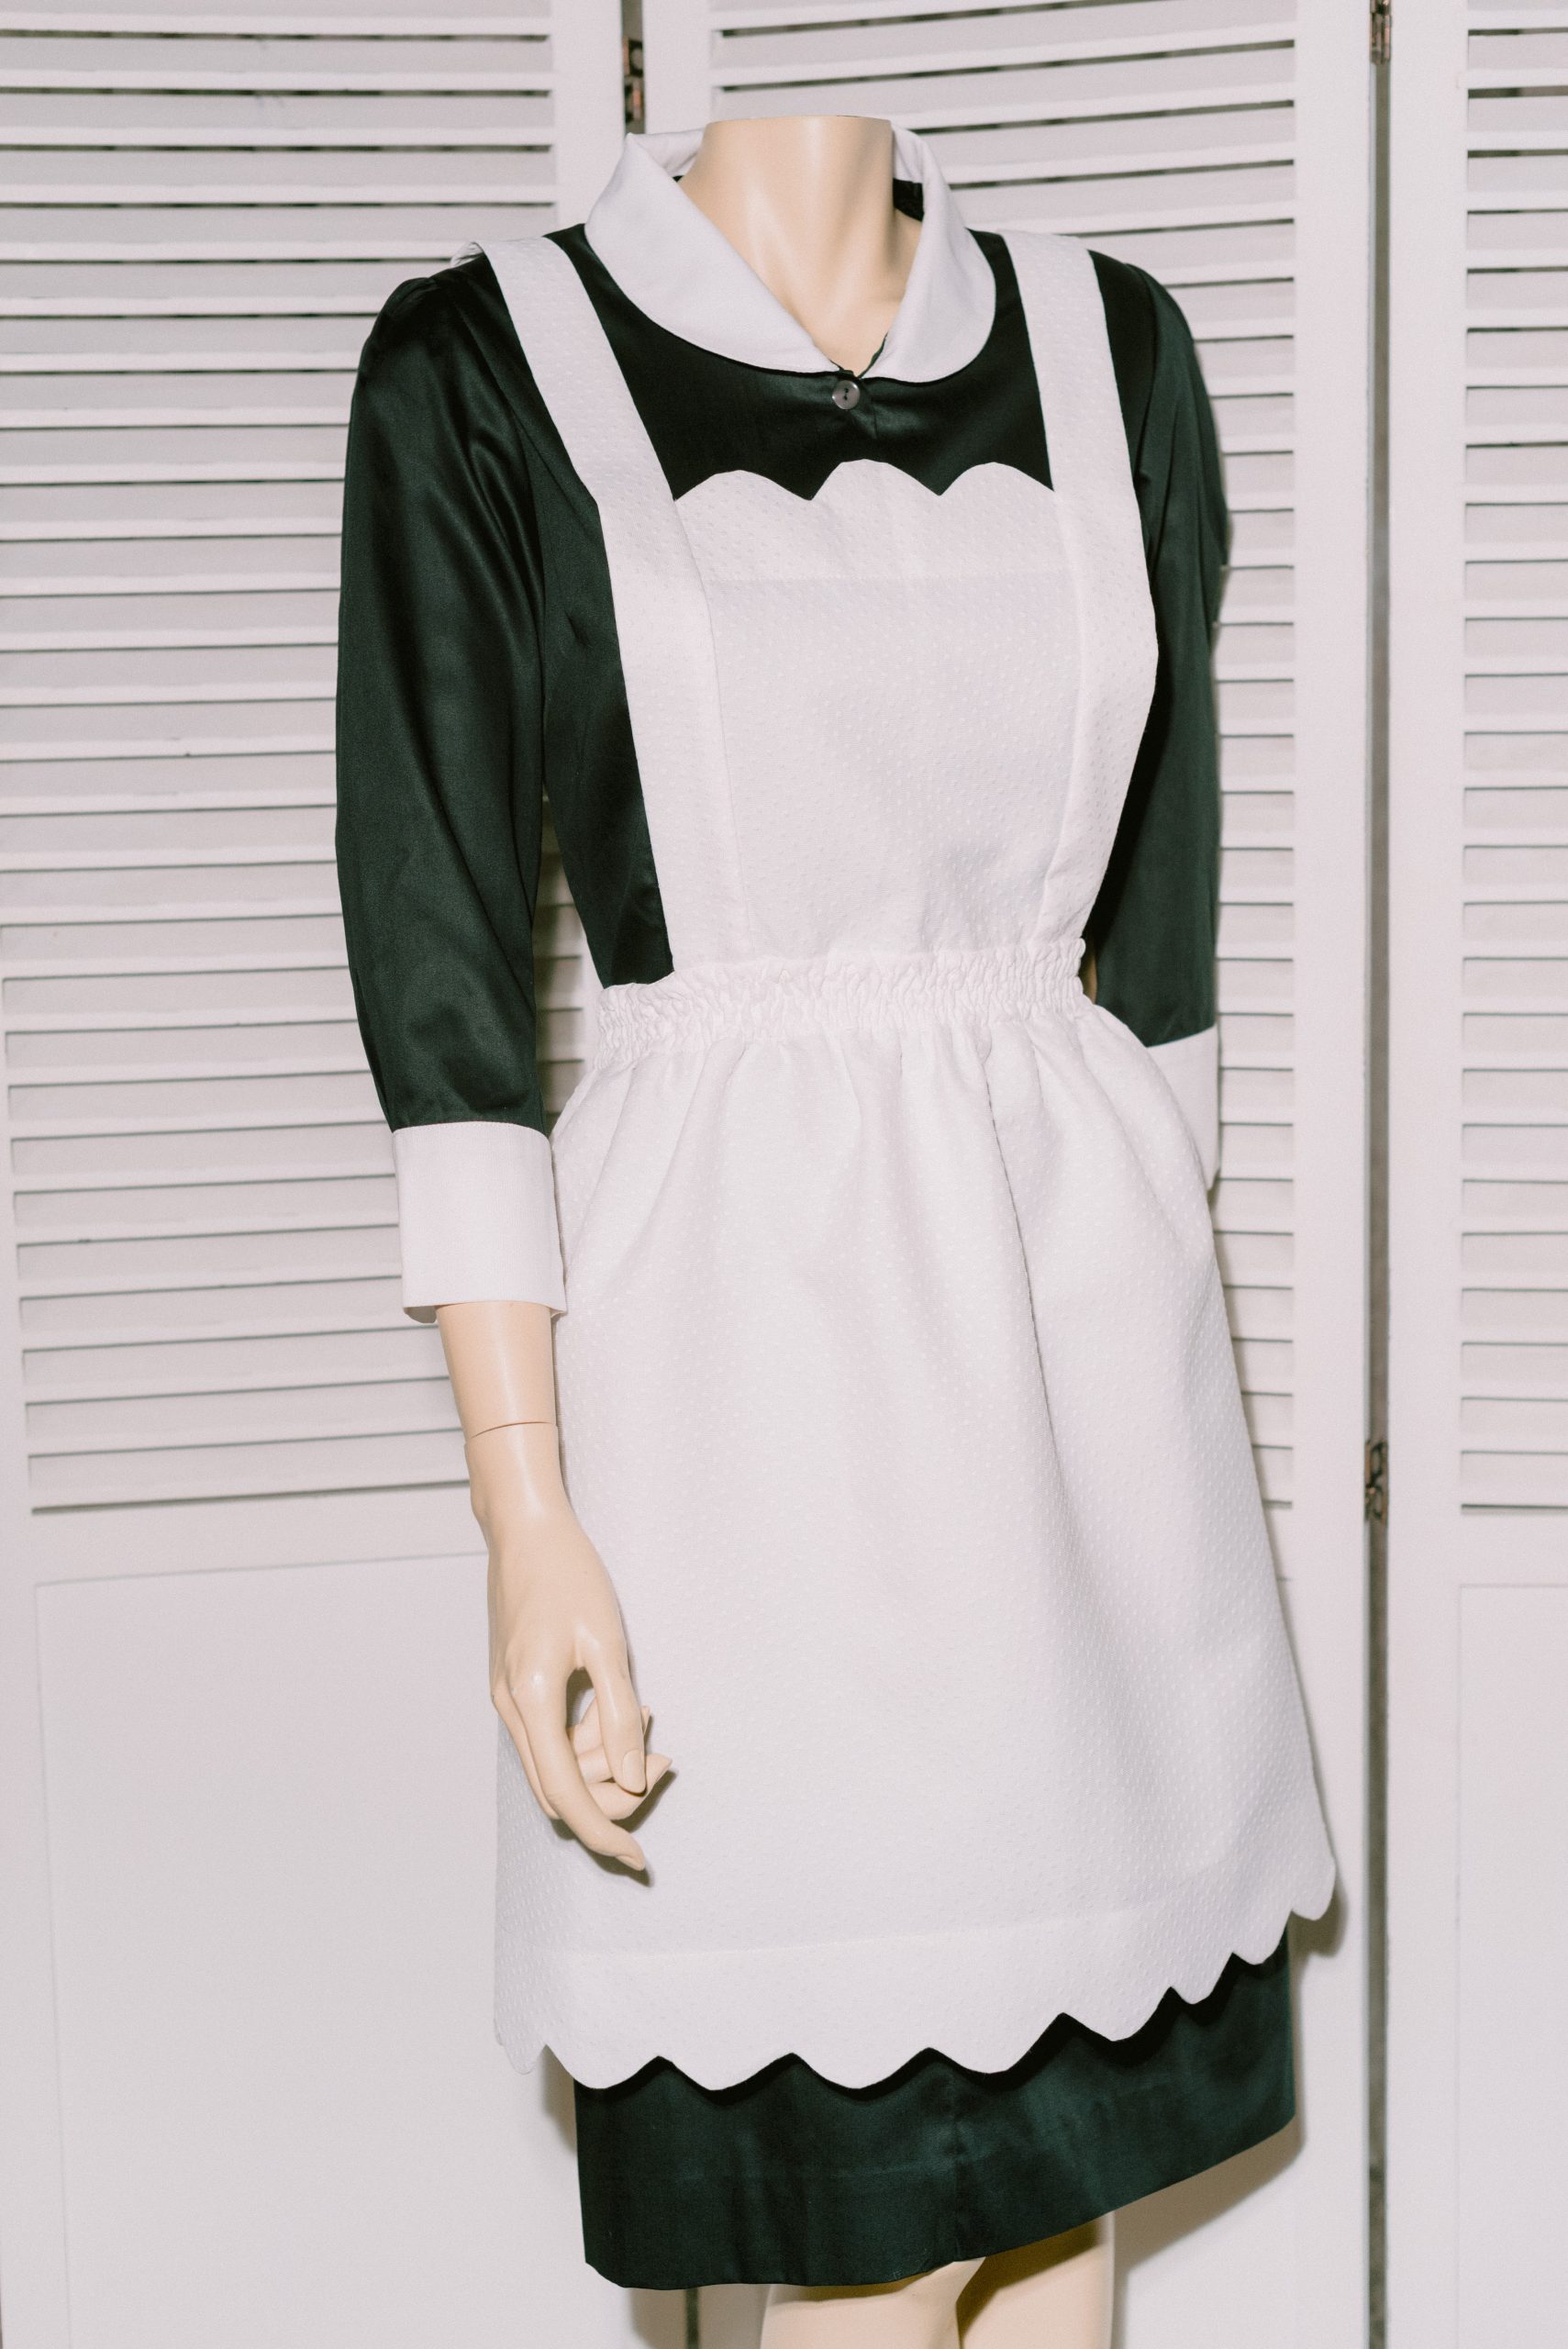 manila maid uniform